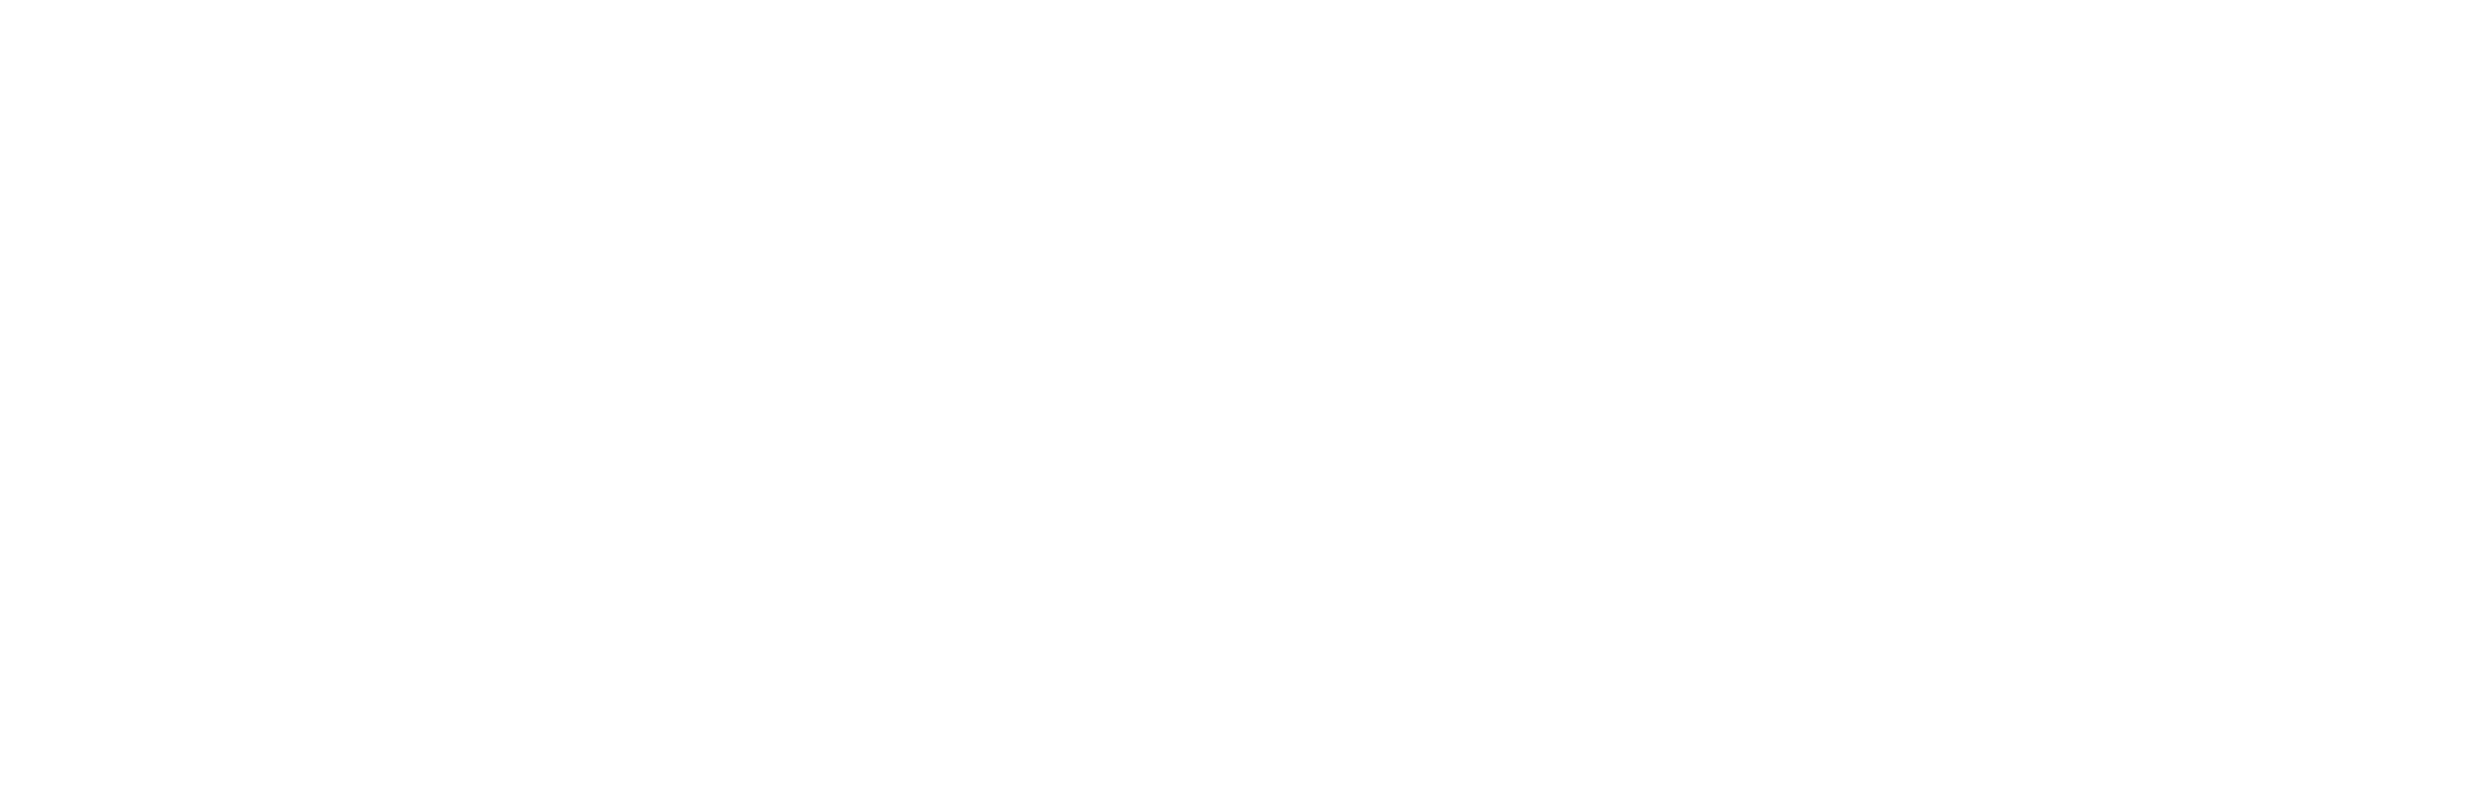 GreenBox logo white